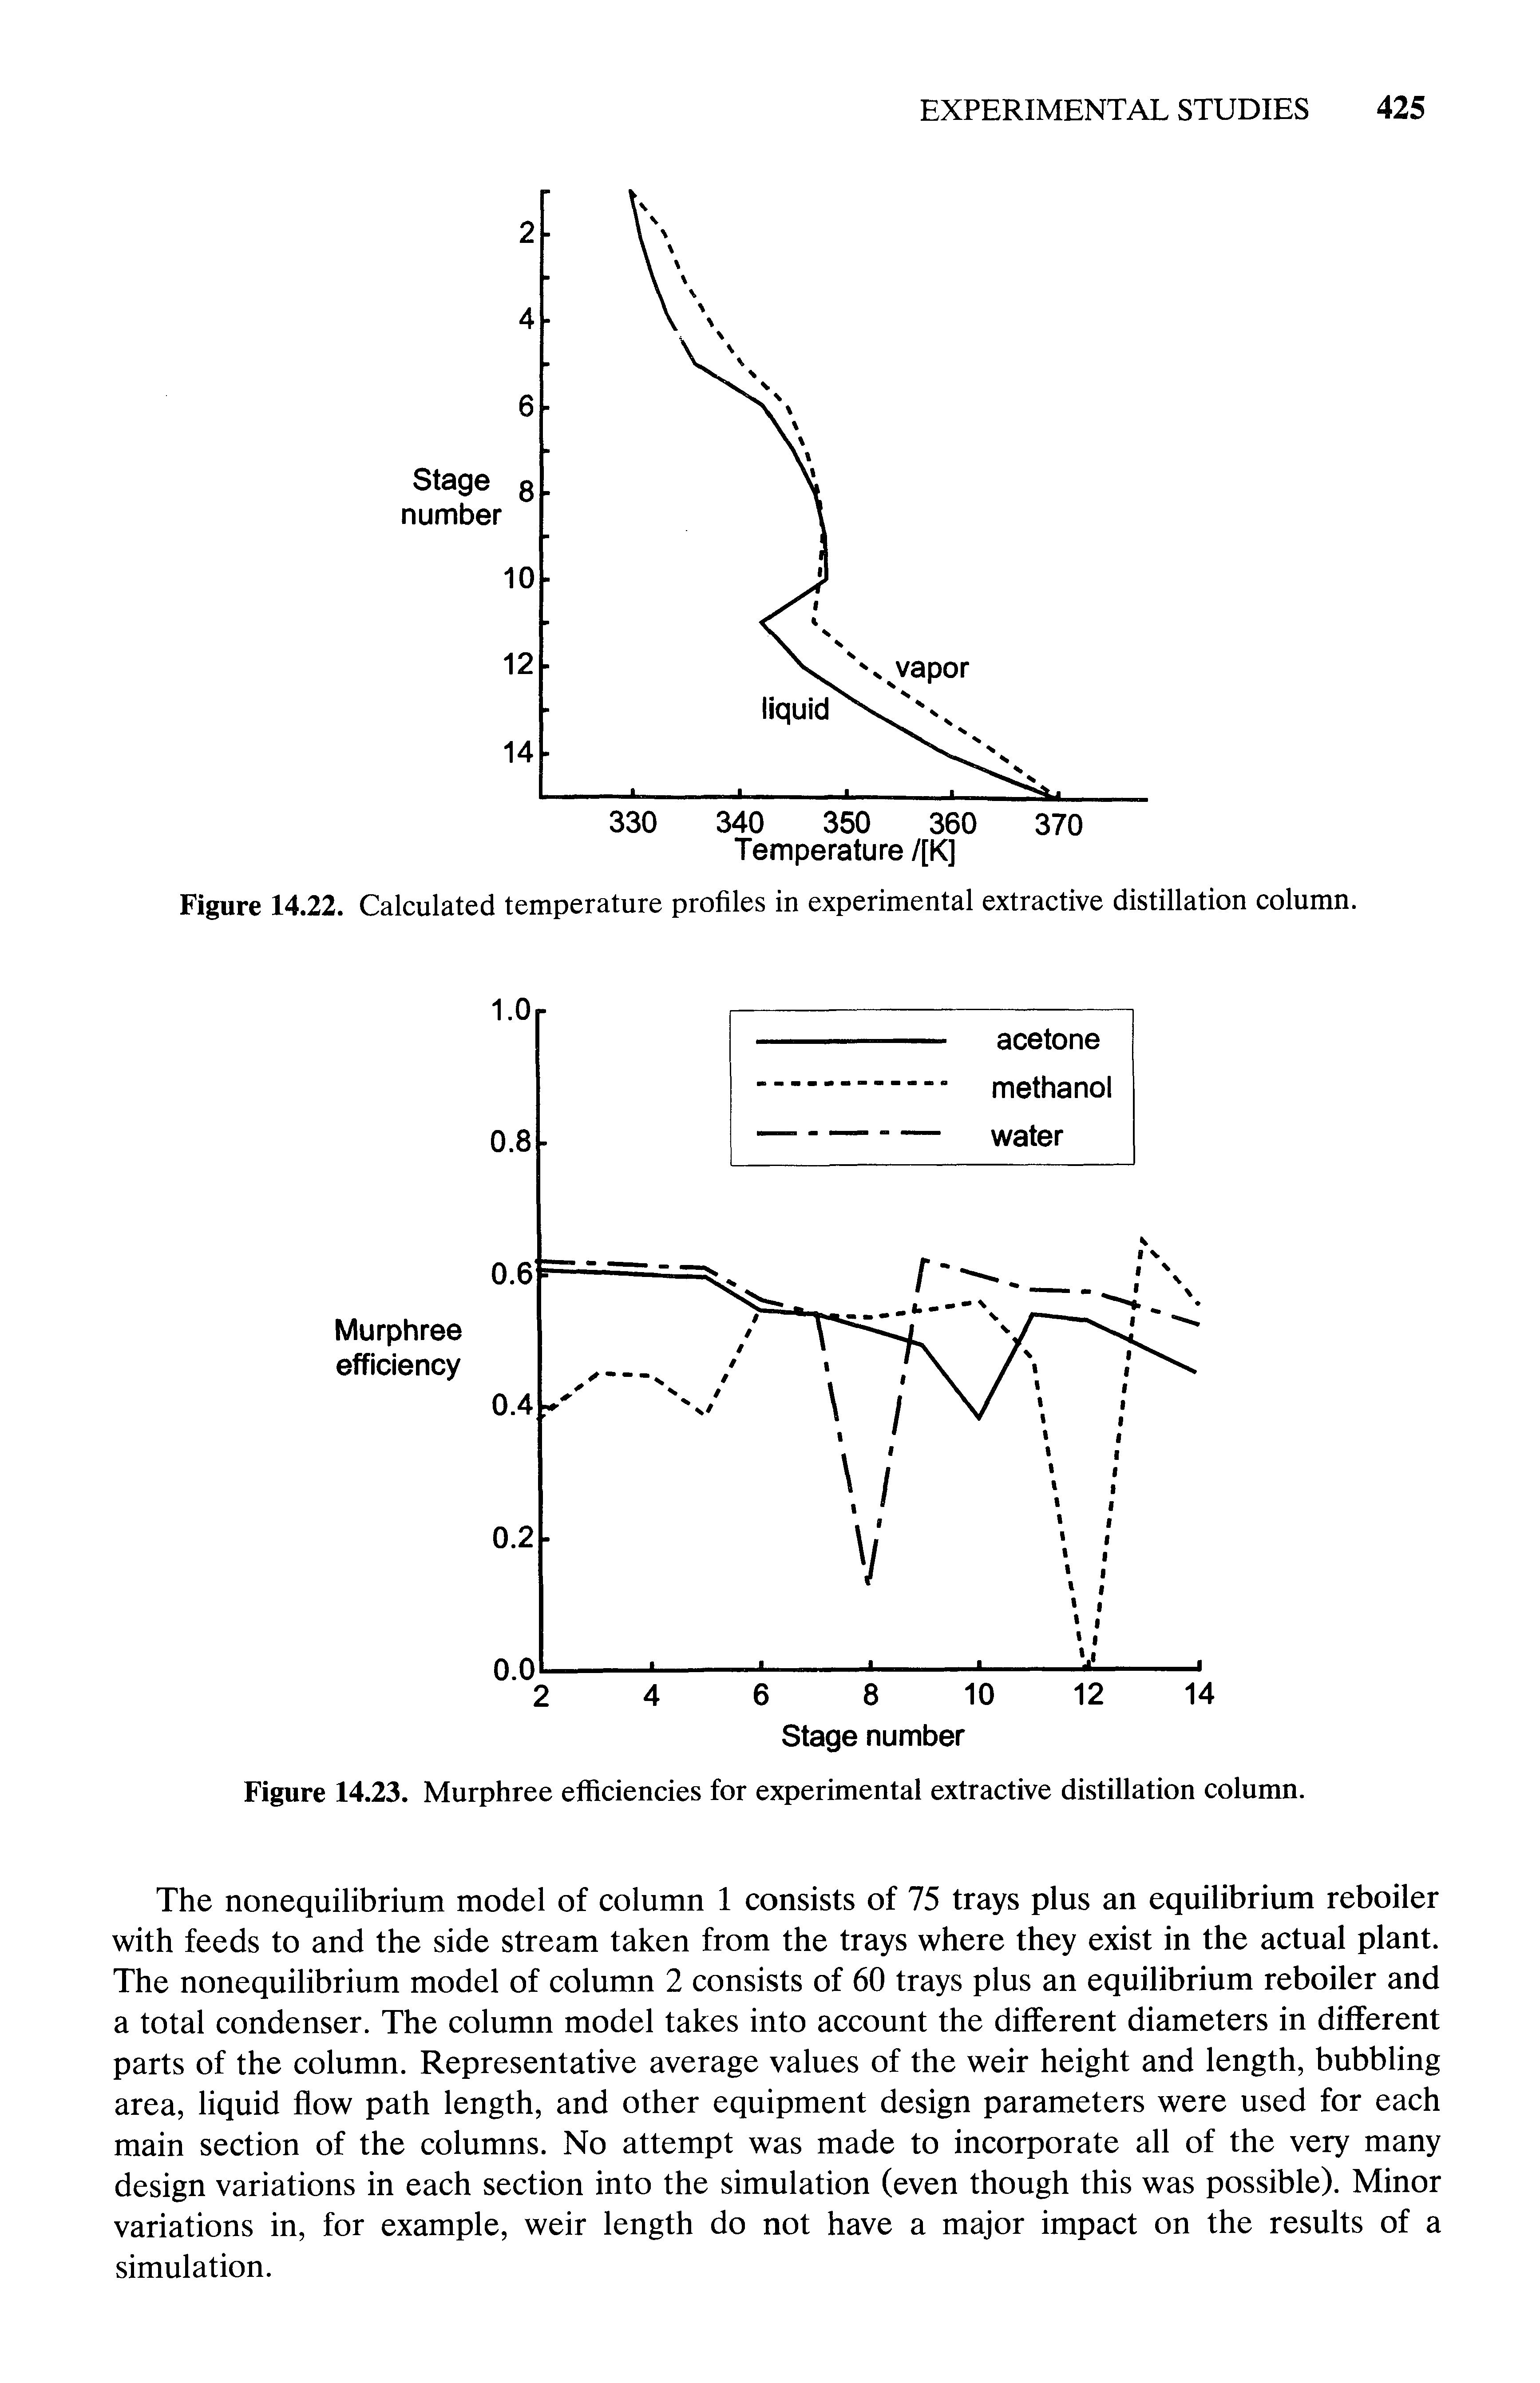 Figure 14.22. Calculated temperature profiles in experimental extractive distillation column.